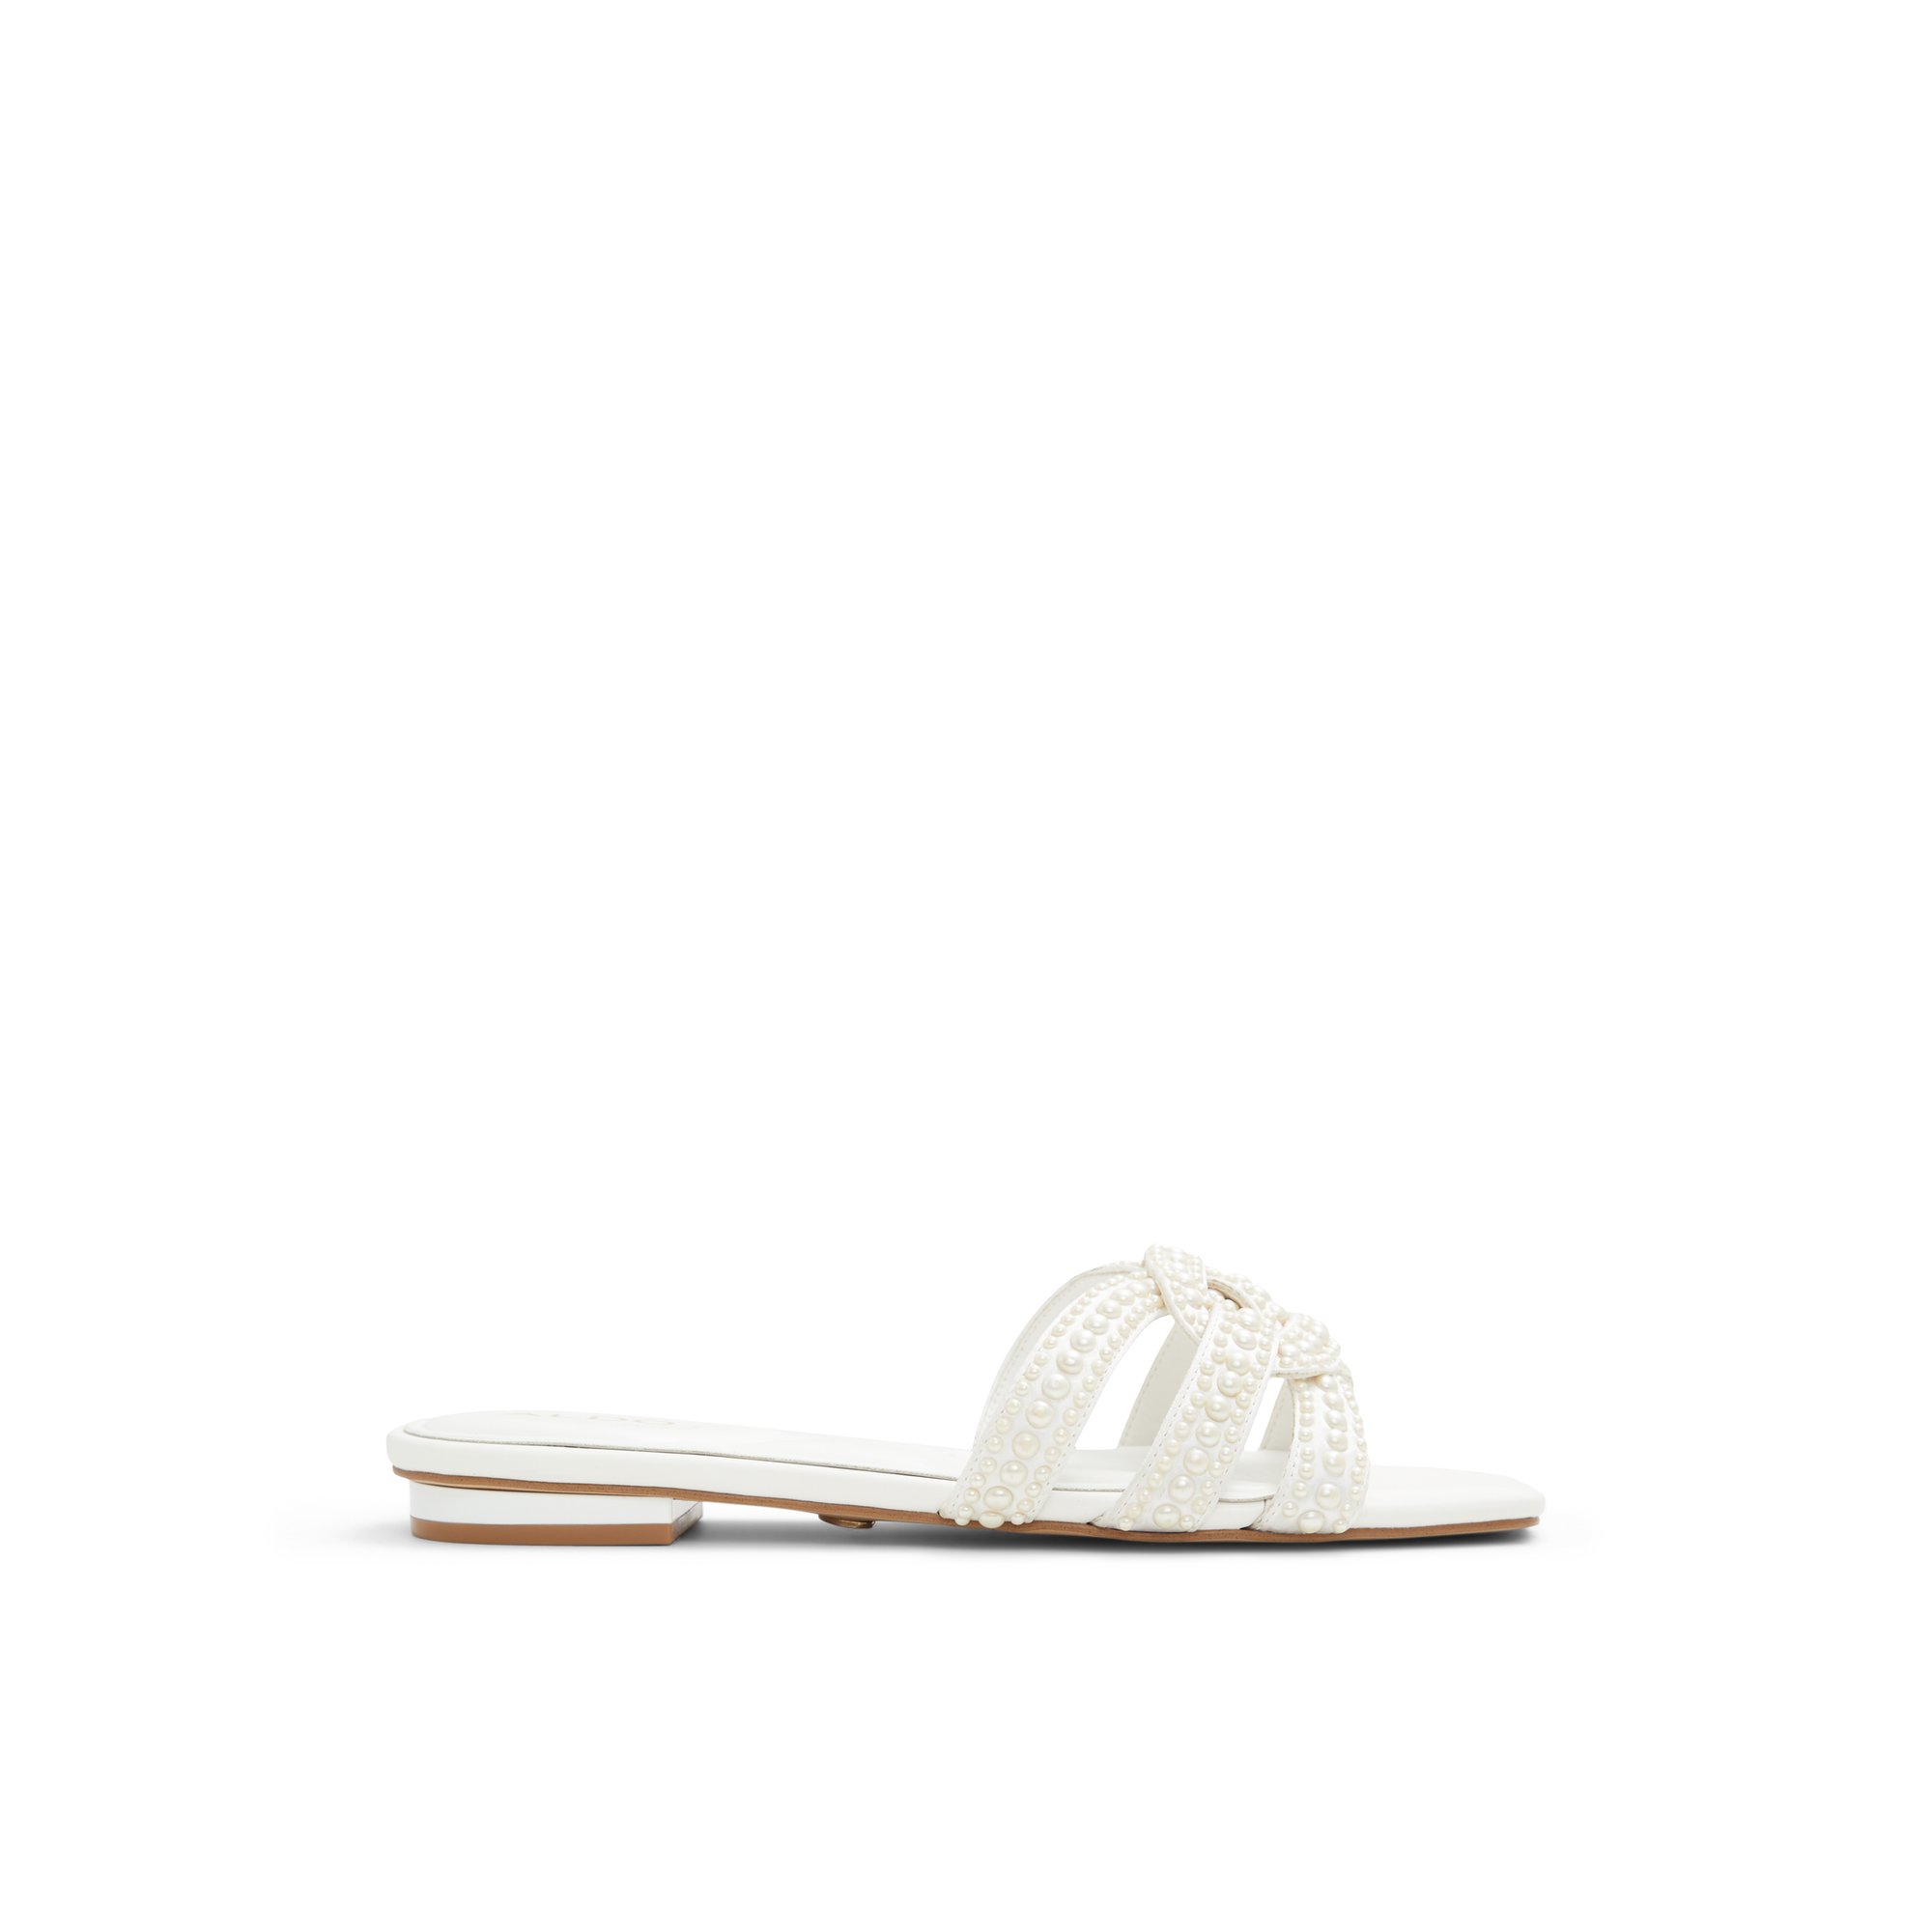 ALDO Lilu - Women's Sandals Flats - White